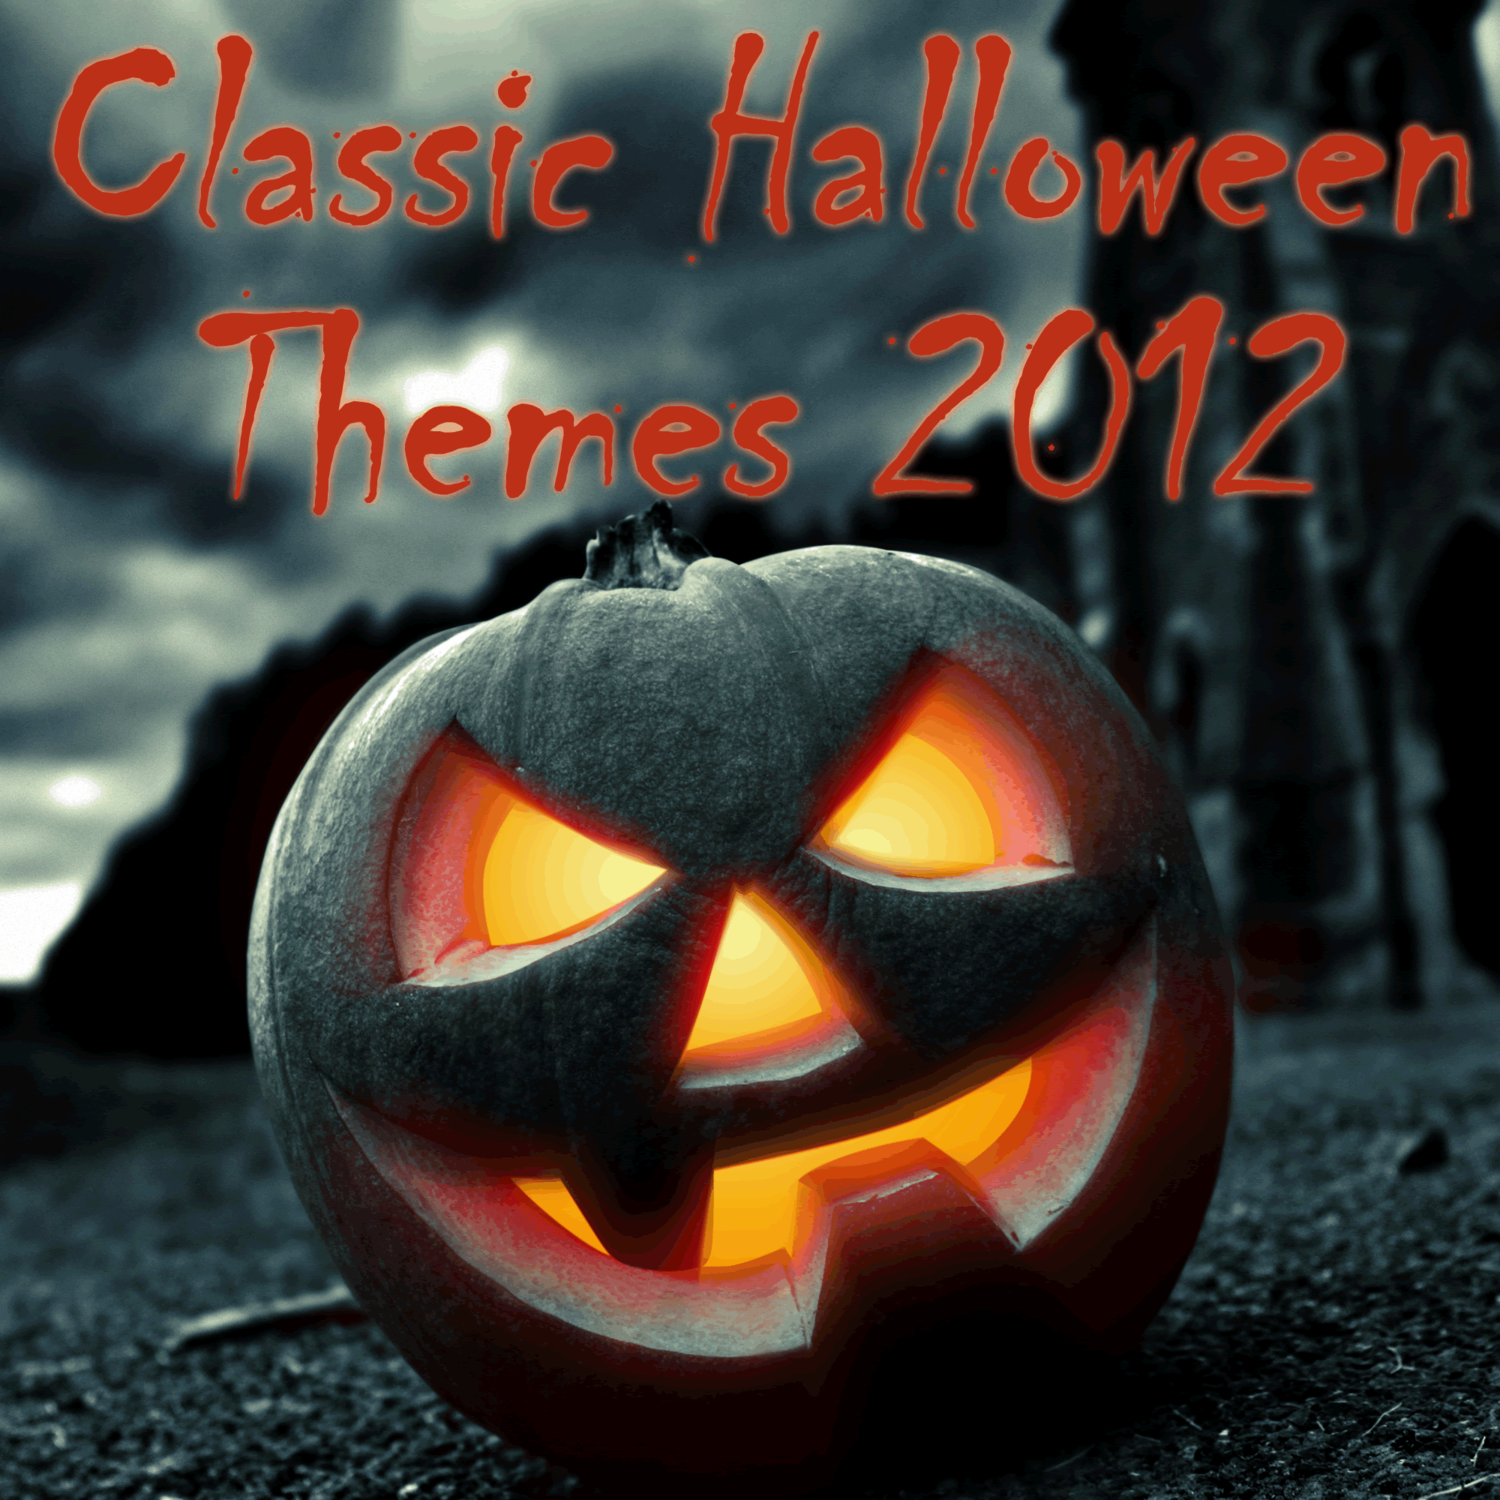 Classic Halloween Themes 2012